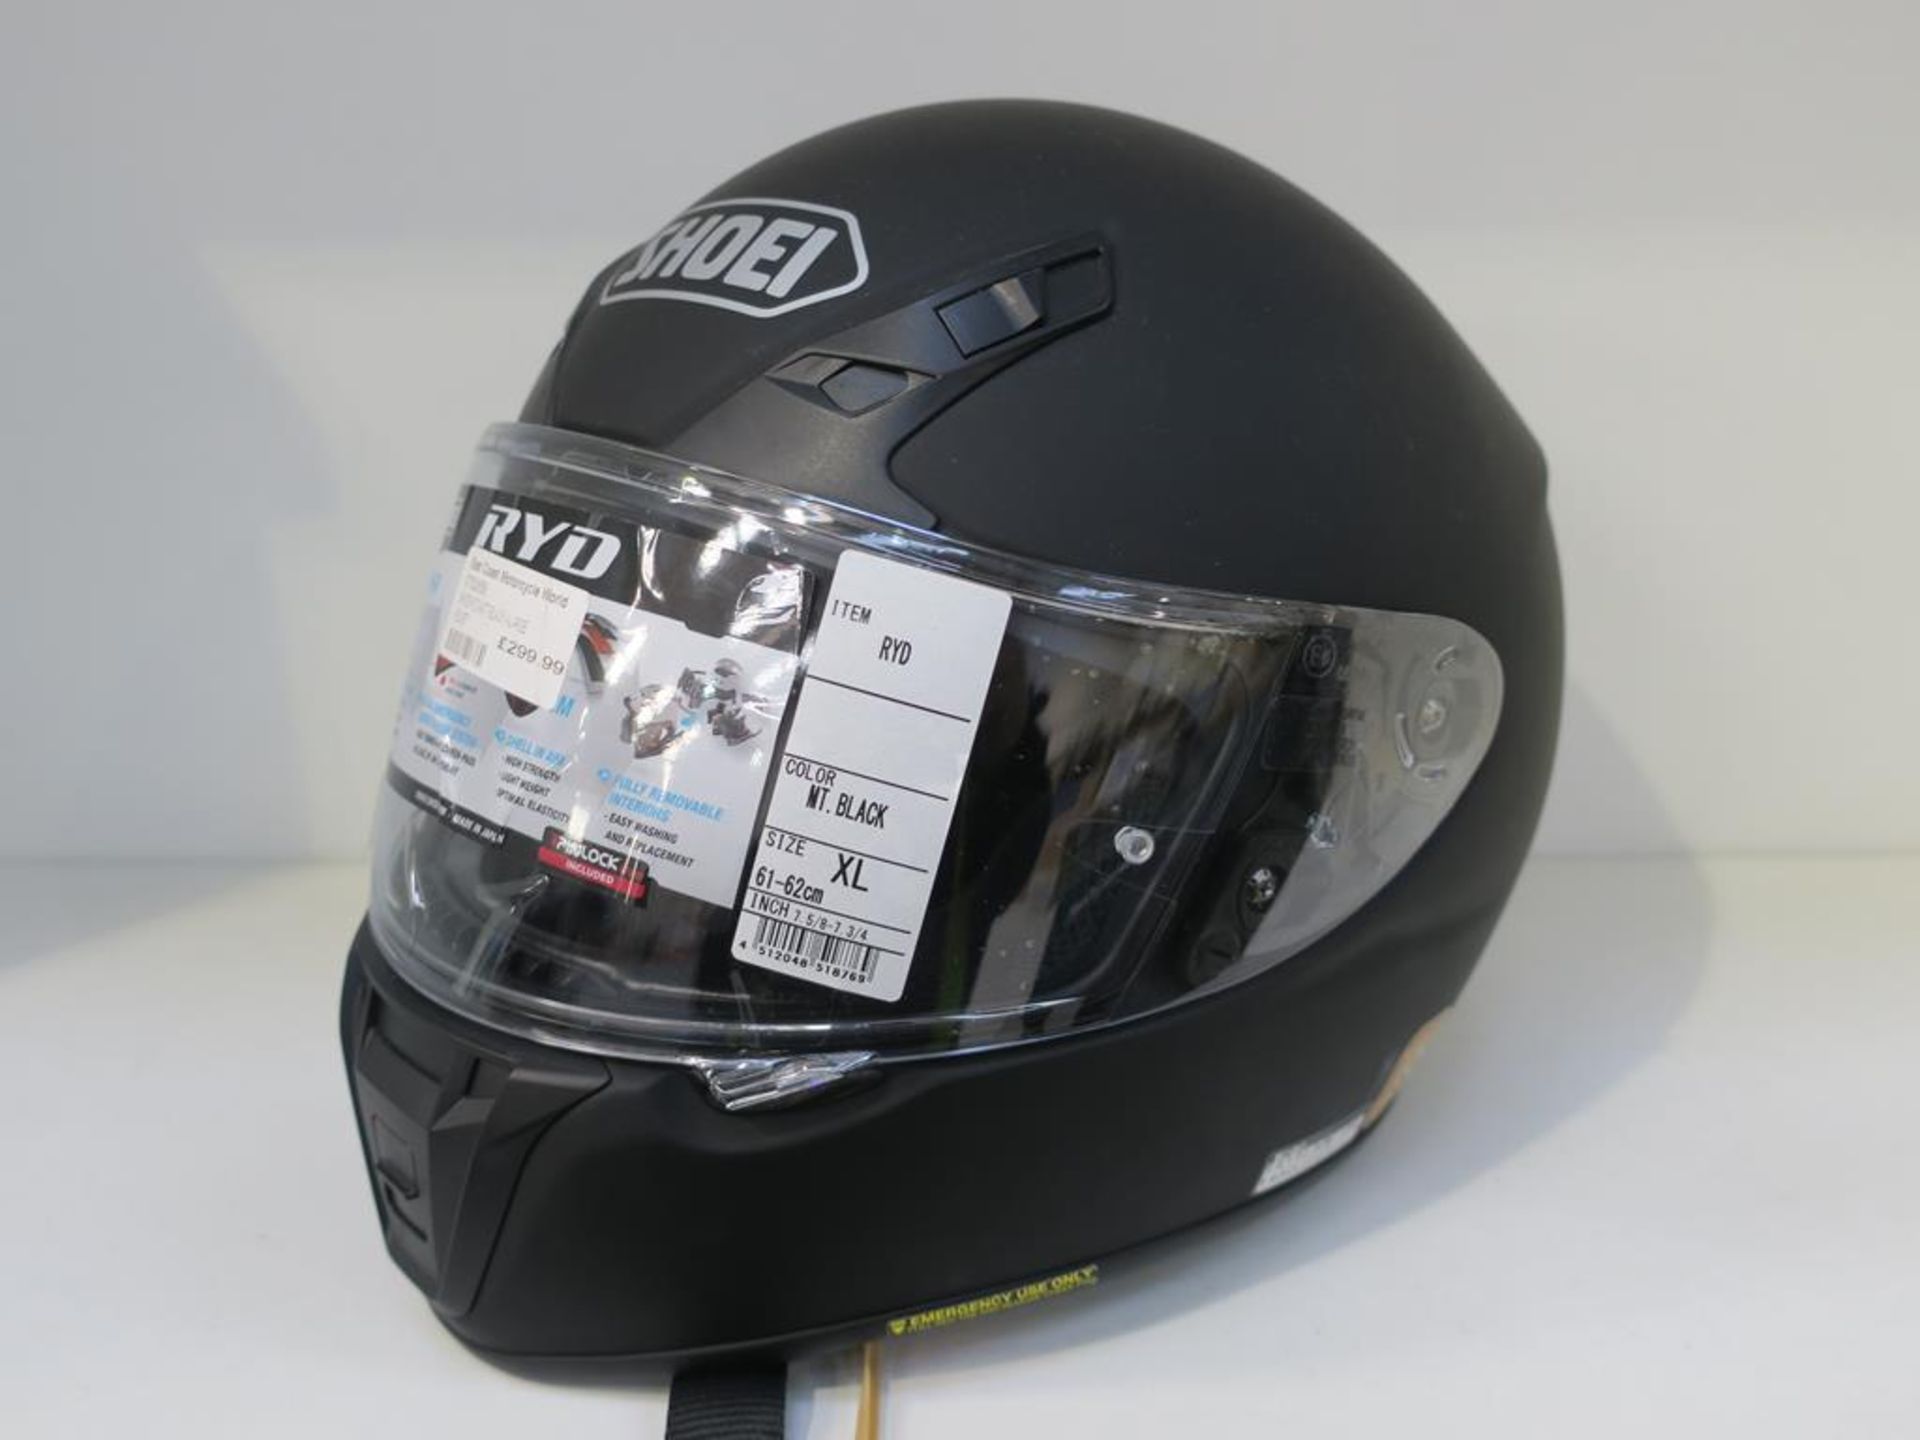 * A Shoei Ryd Matt Black XL Helmet (RRP £256.99)